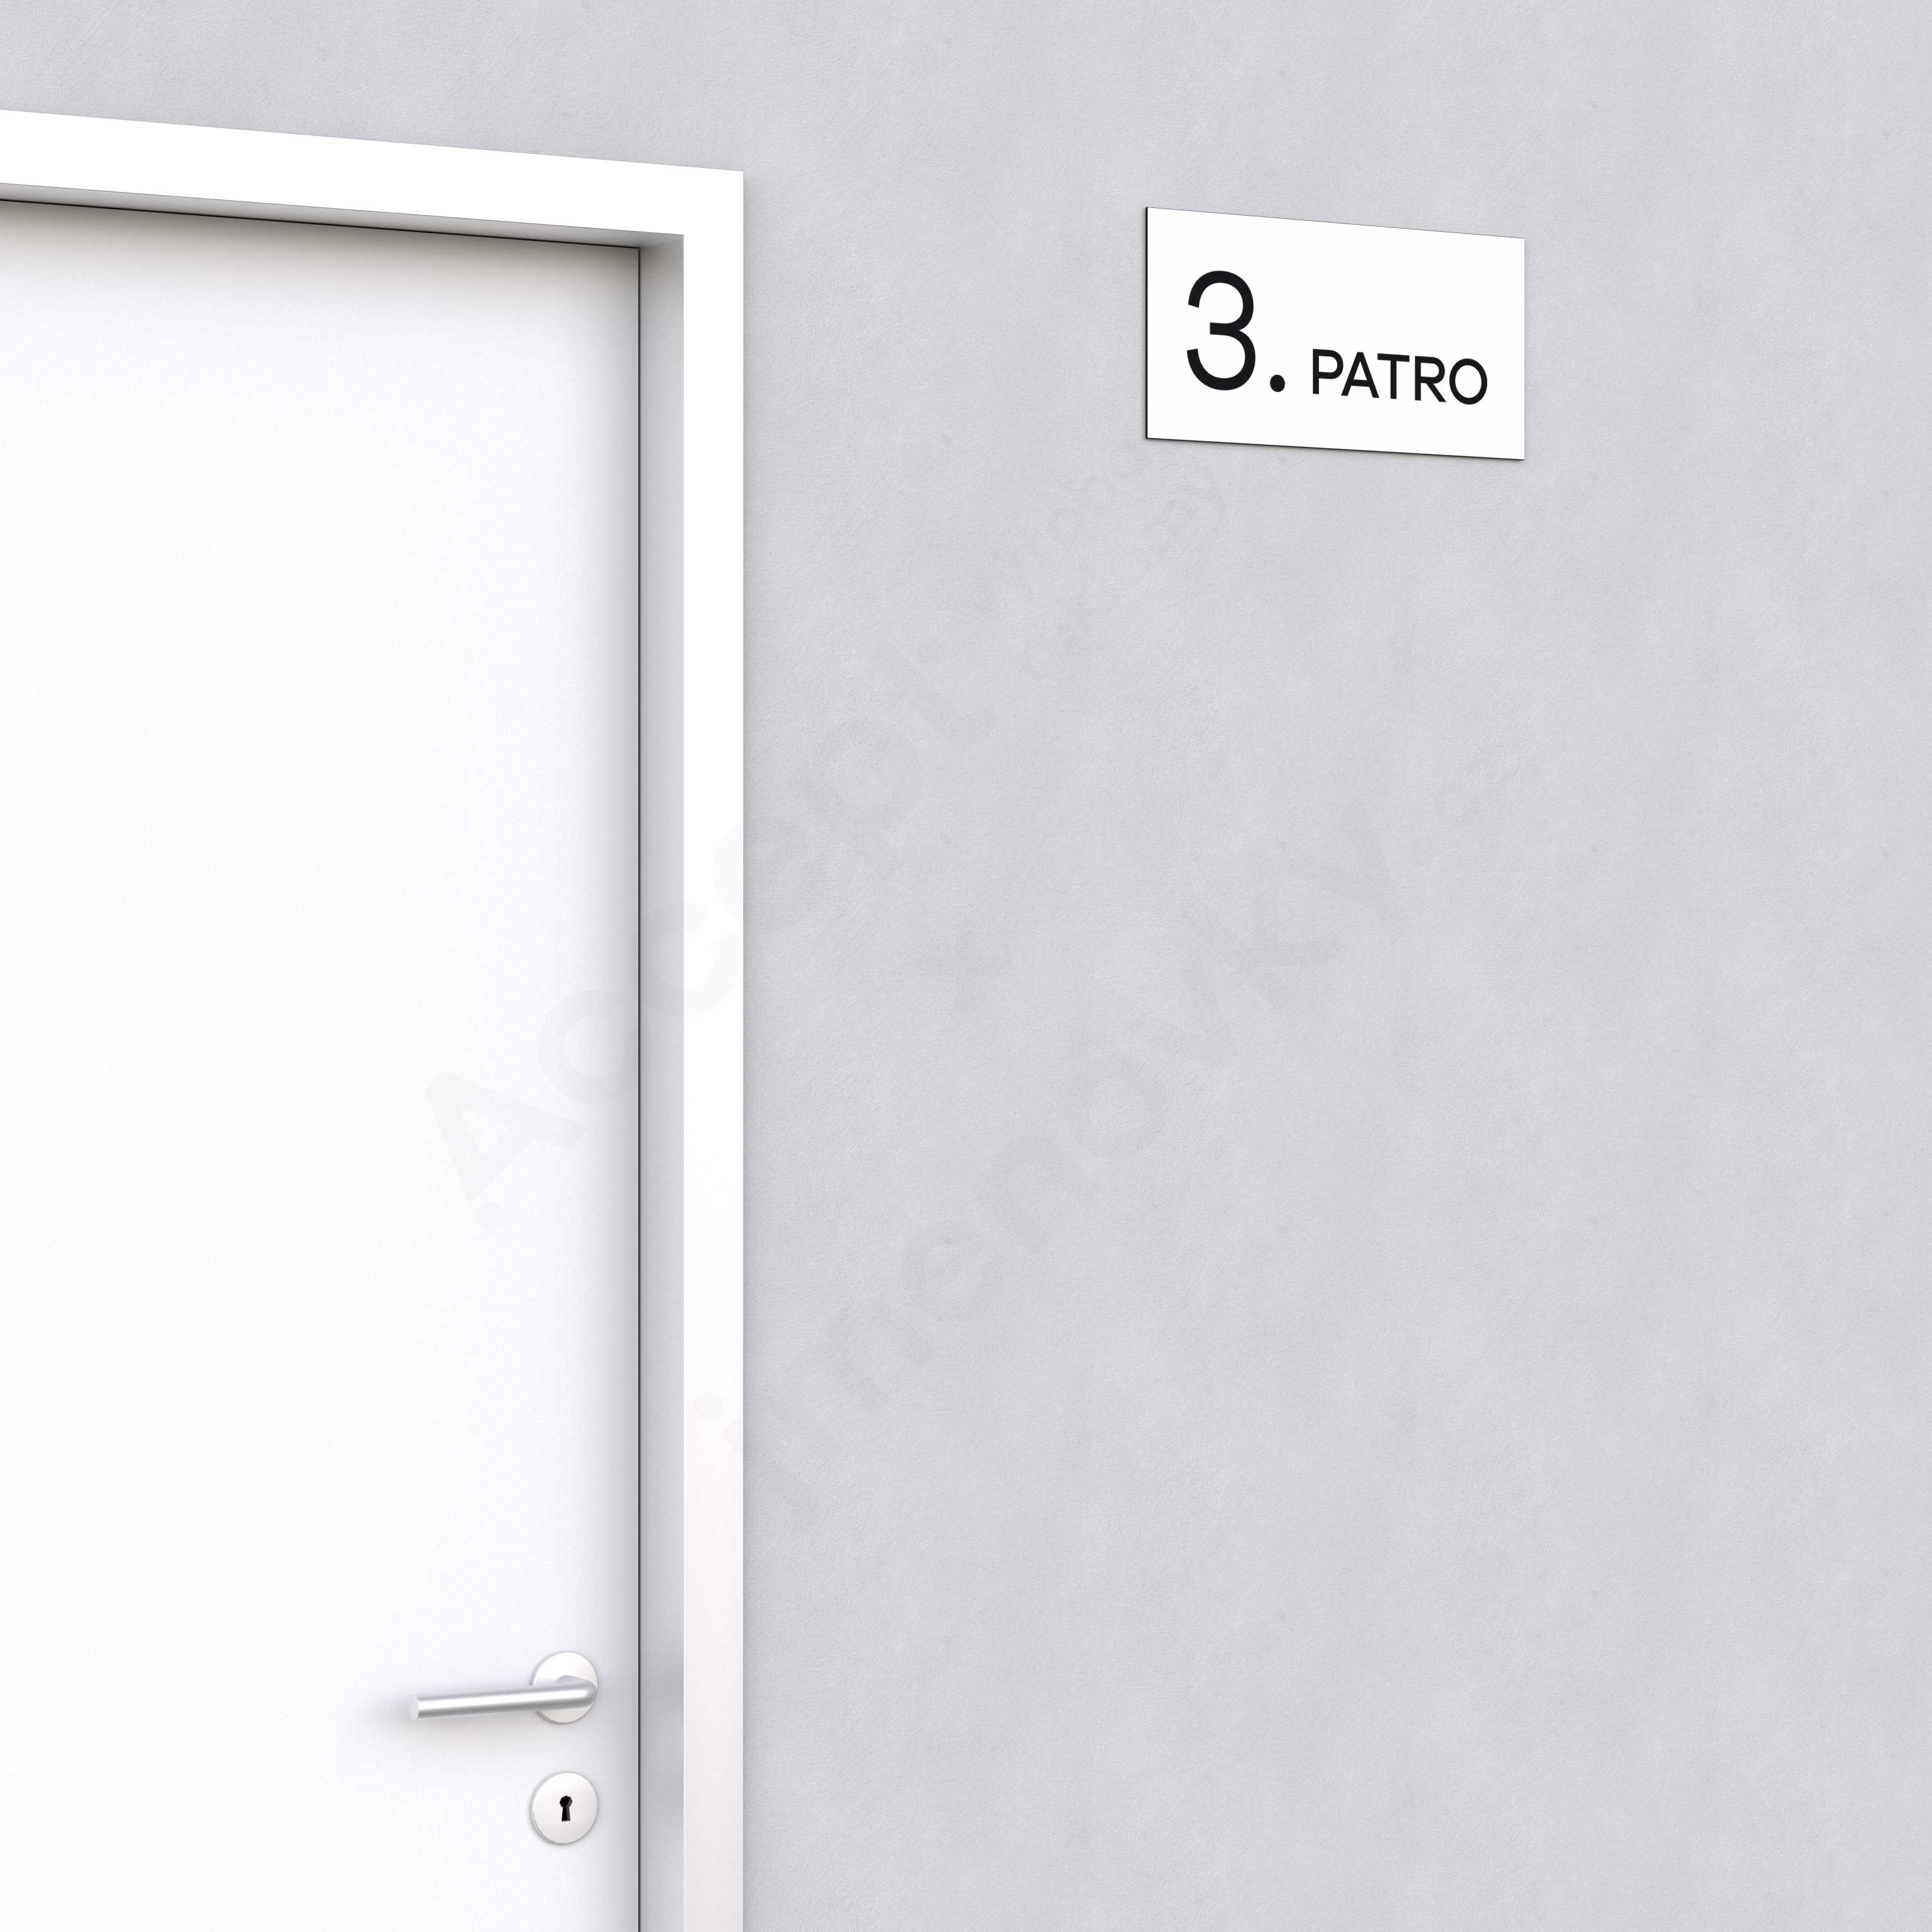 Označení podlaží "3. PATRO" - bílá tabulka - černý popis - náhled